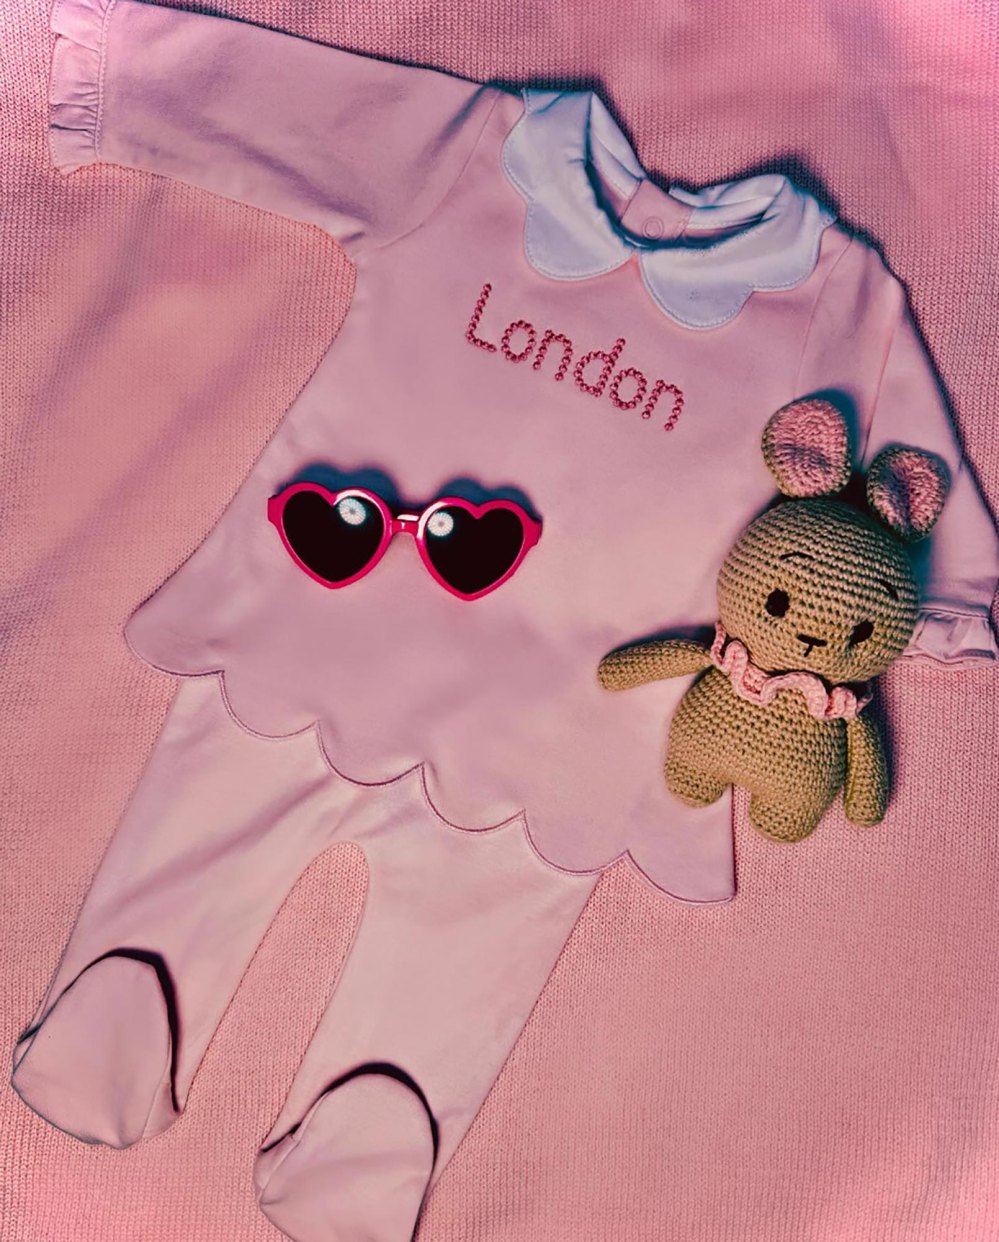 Paris Hilton and Carter Reum s Daughter London Is A Dream Come True